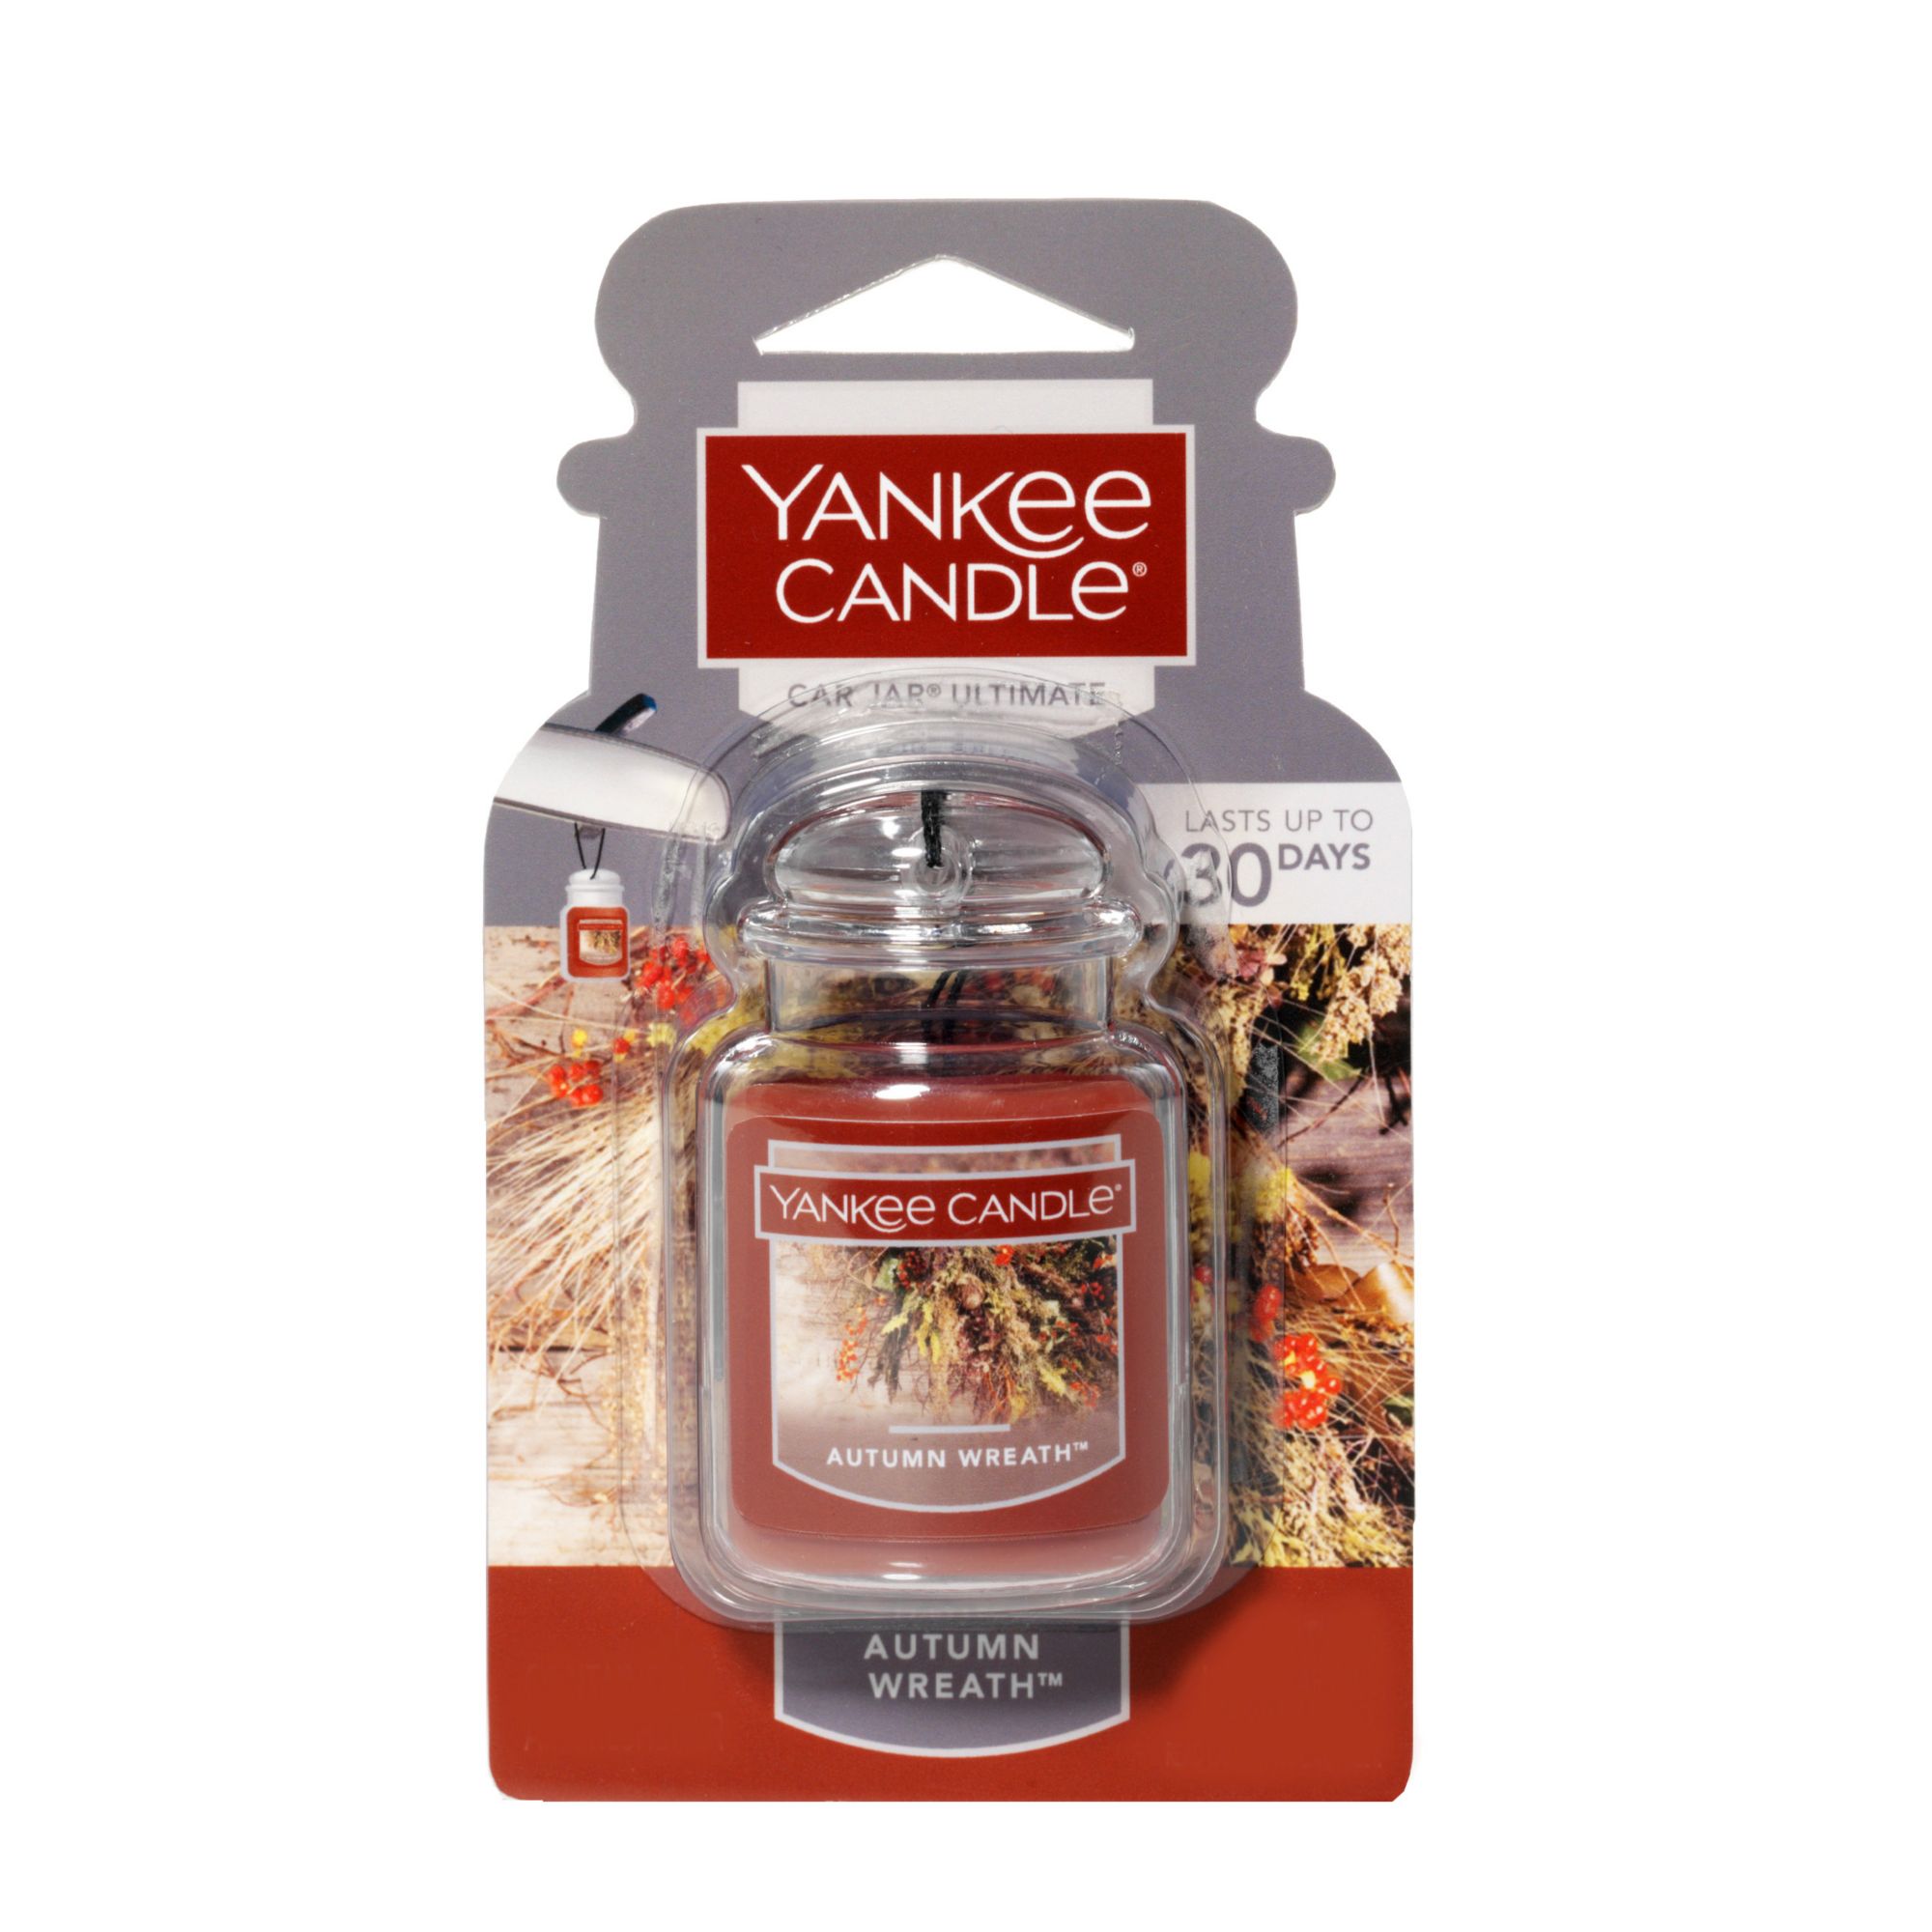 Yankee Candle Pink Sands Ultimate Hanging Car Jar Odor Neutralizing Air  Freshener, 2 Count 